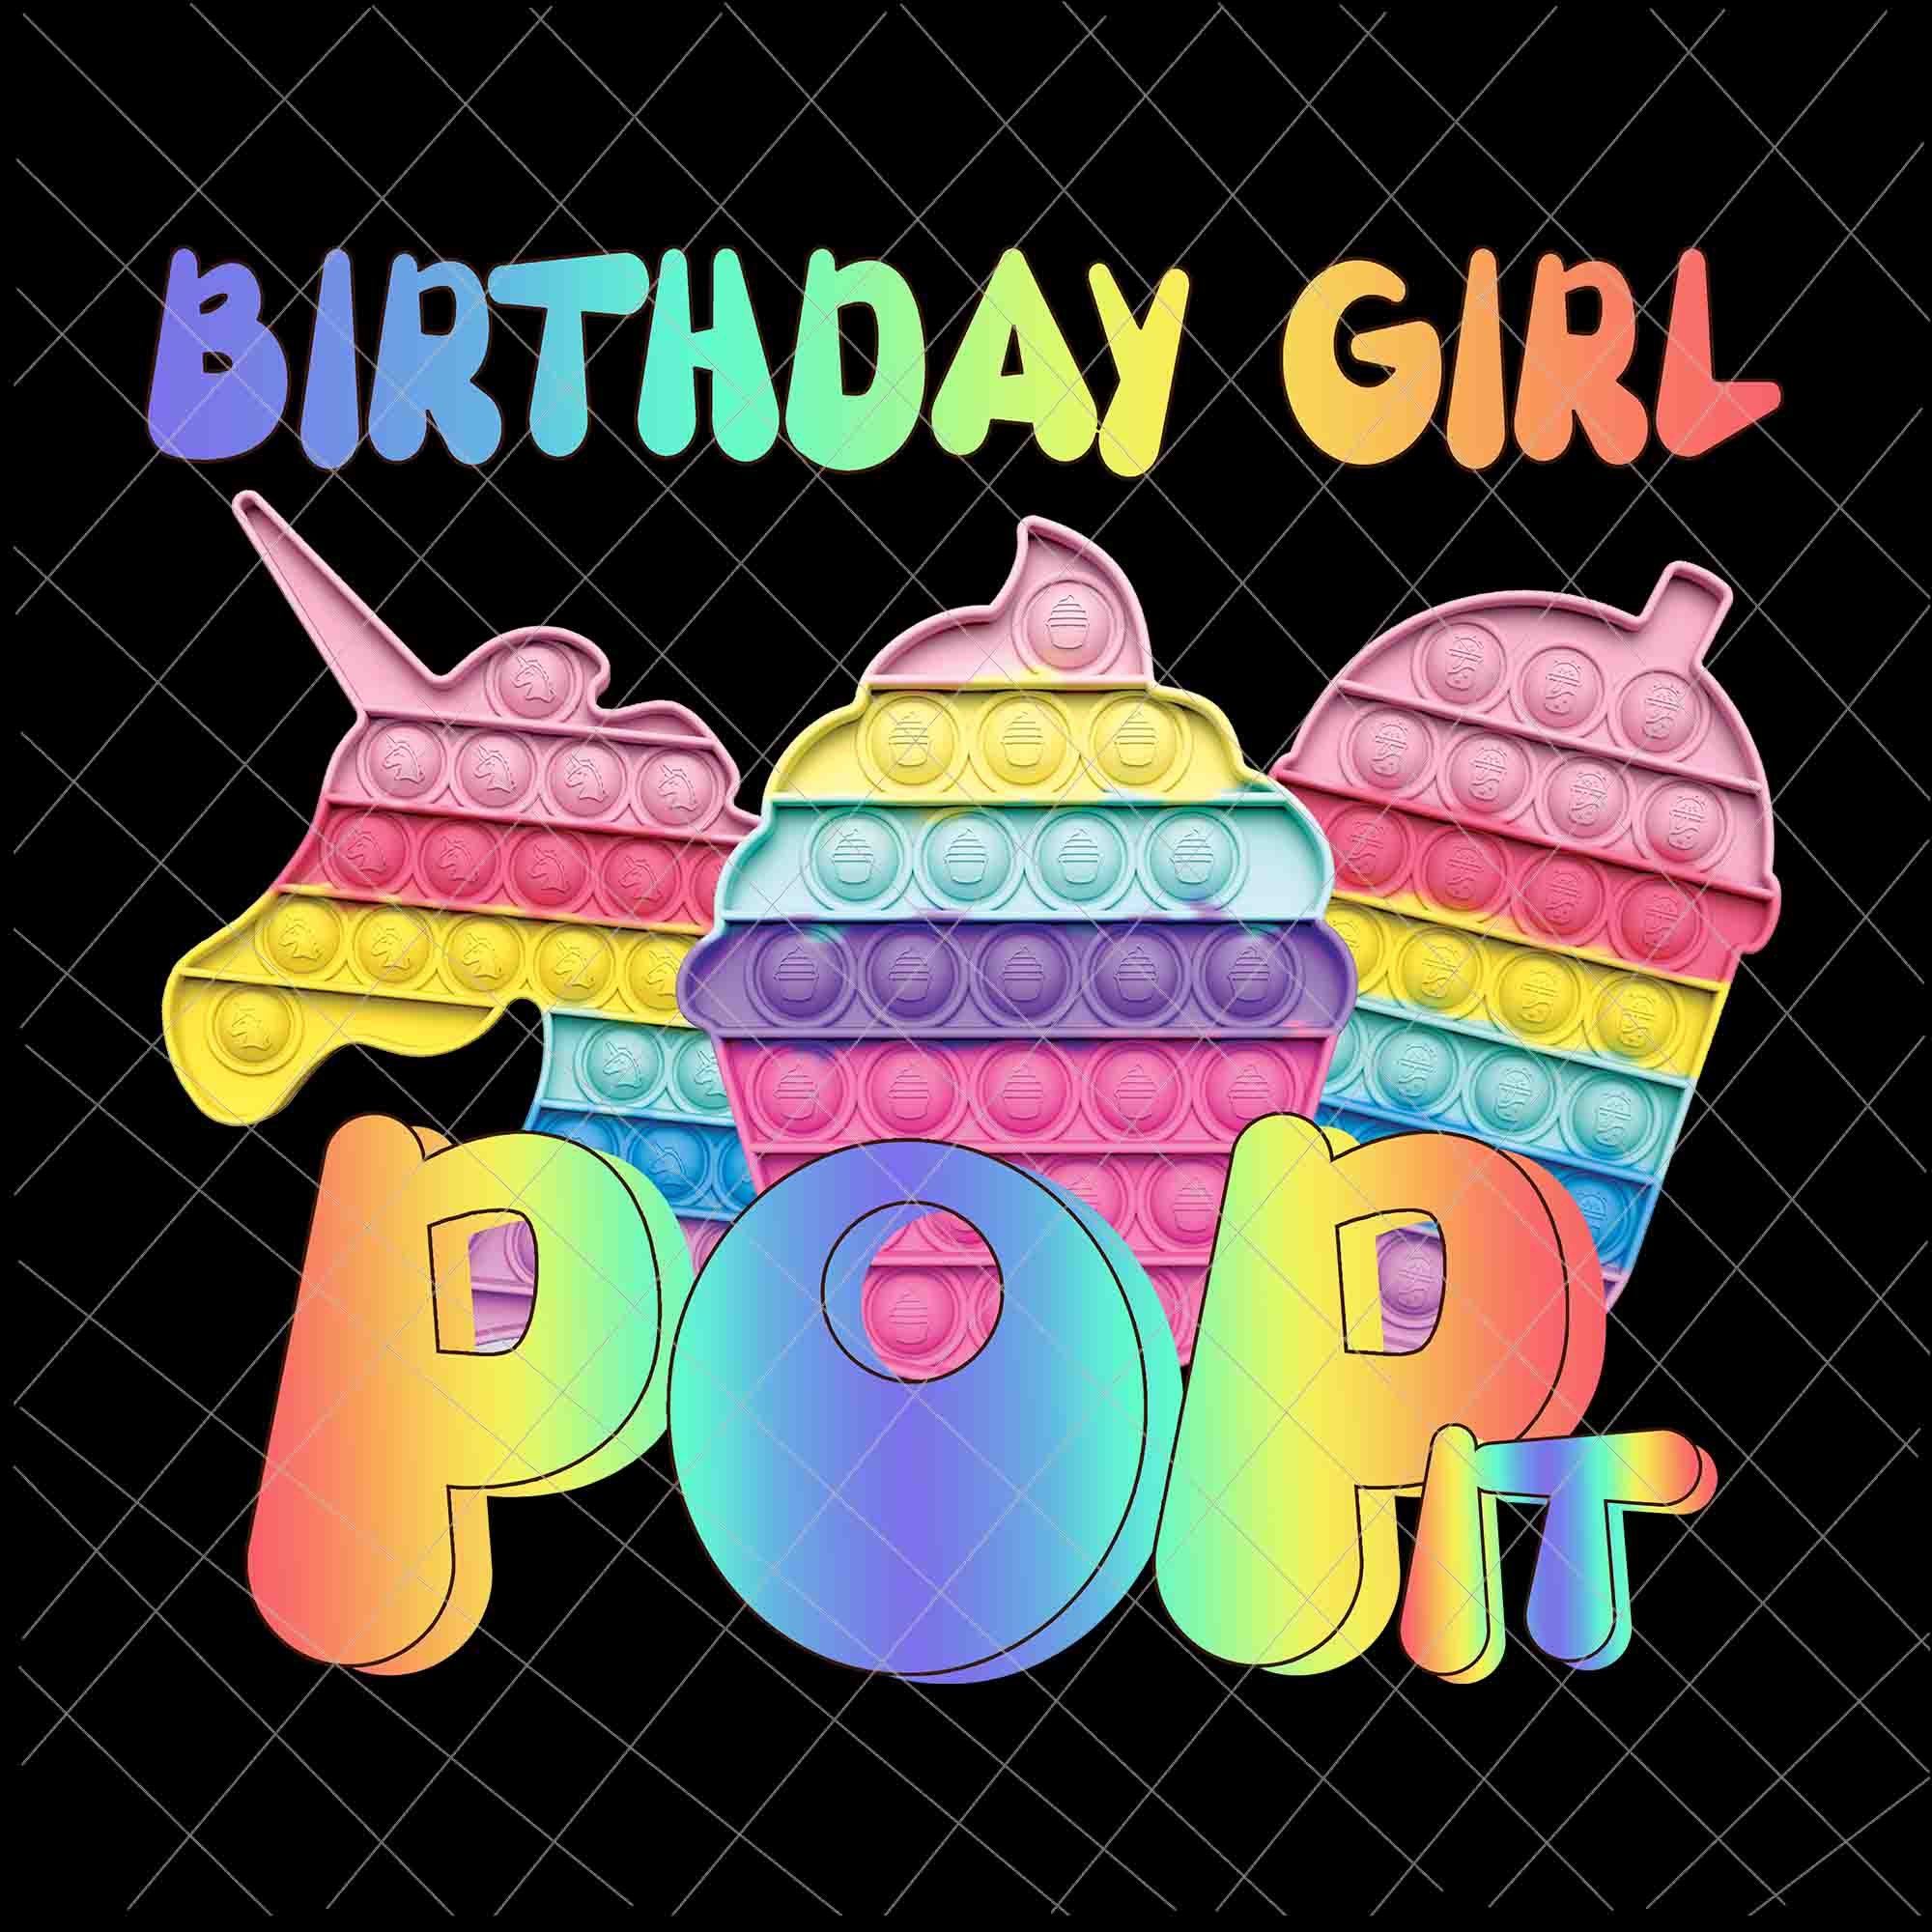 Birthday girl pop it Png, unicorn girl pop it birthday Png, Birthday girl Png, pop it Png